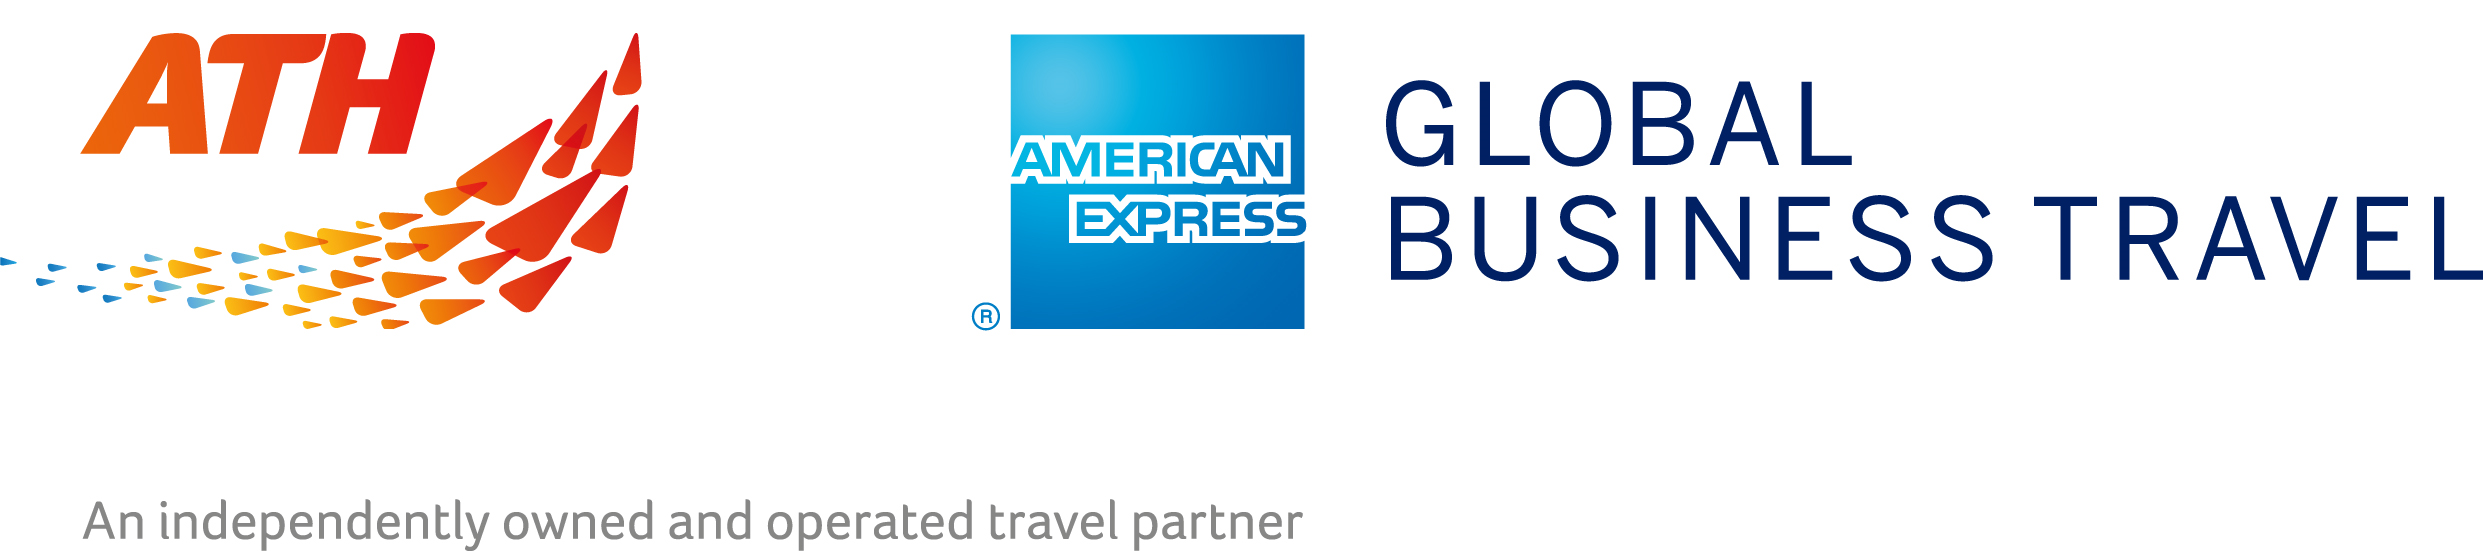 ATH логотип. ATH American Express. American Express Business Travel. ЭЙТИЭЙЧ логотип. Global press